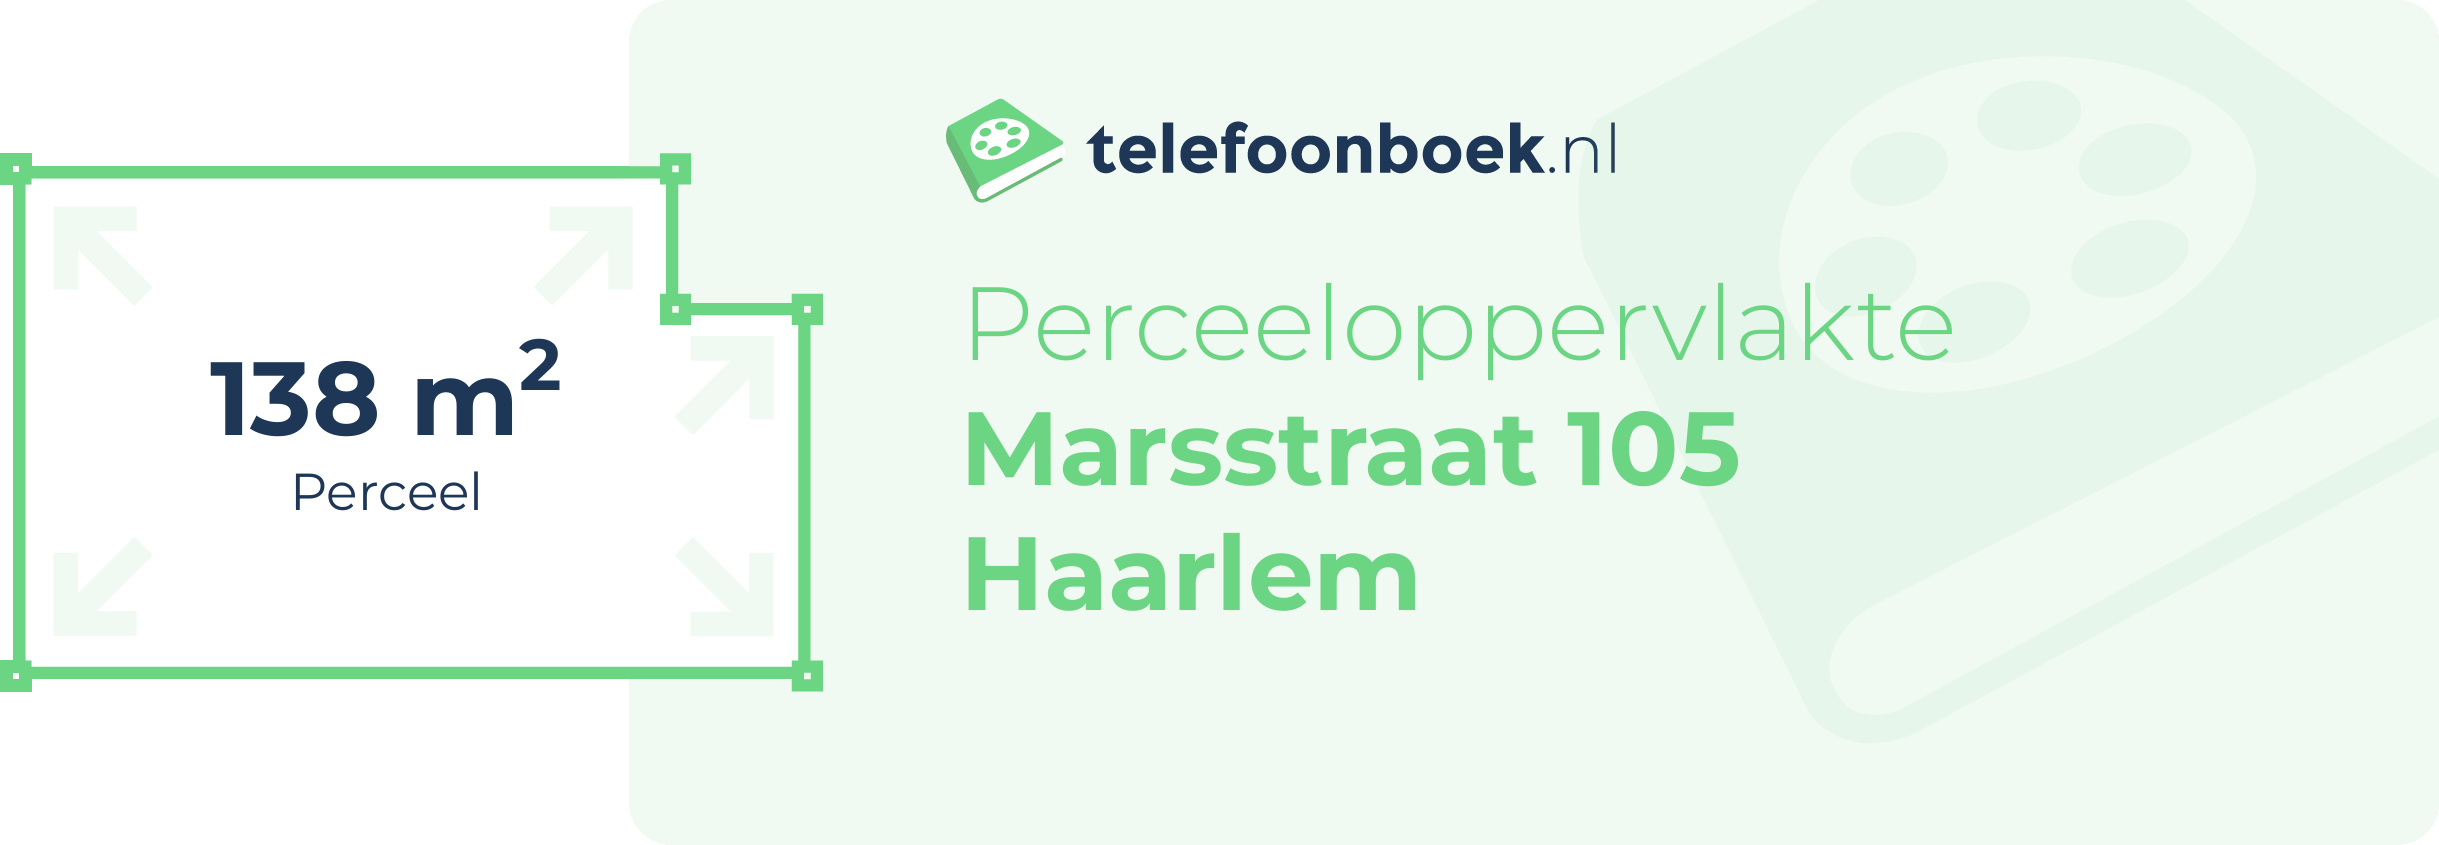 Perceeloppervlakte Marsstraat 105 Haarlem